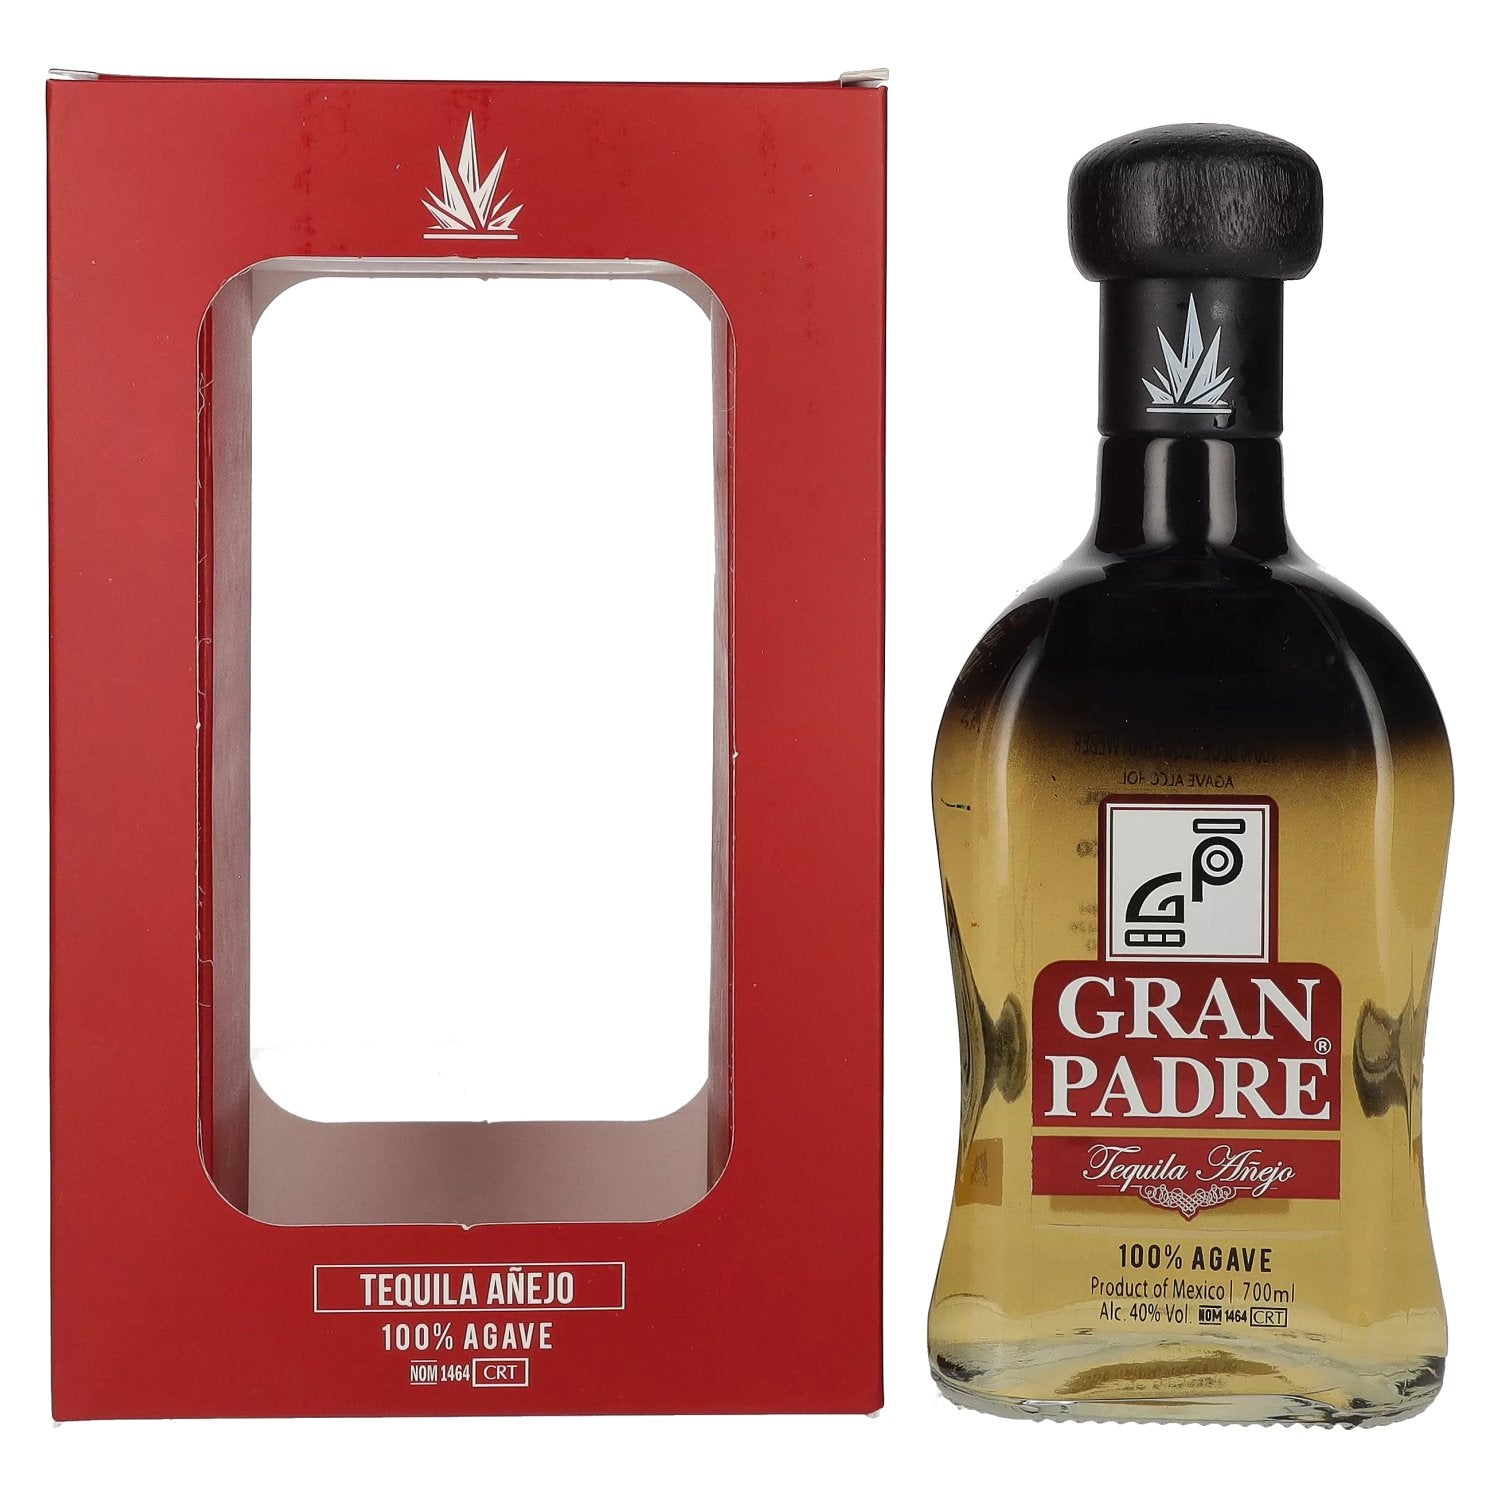 Gran Padre Tequila Anejo 100% Agave 40% Vol. 0,7l in Giftbox